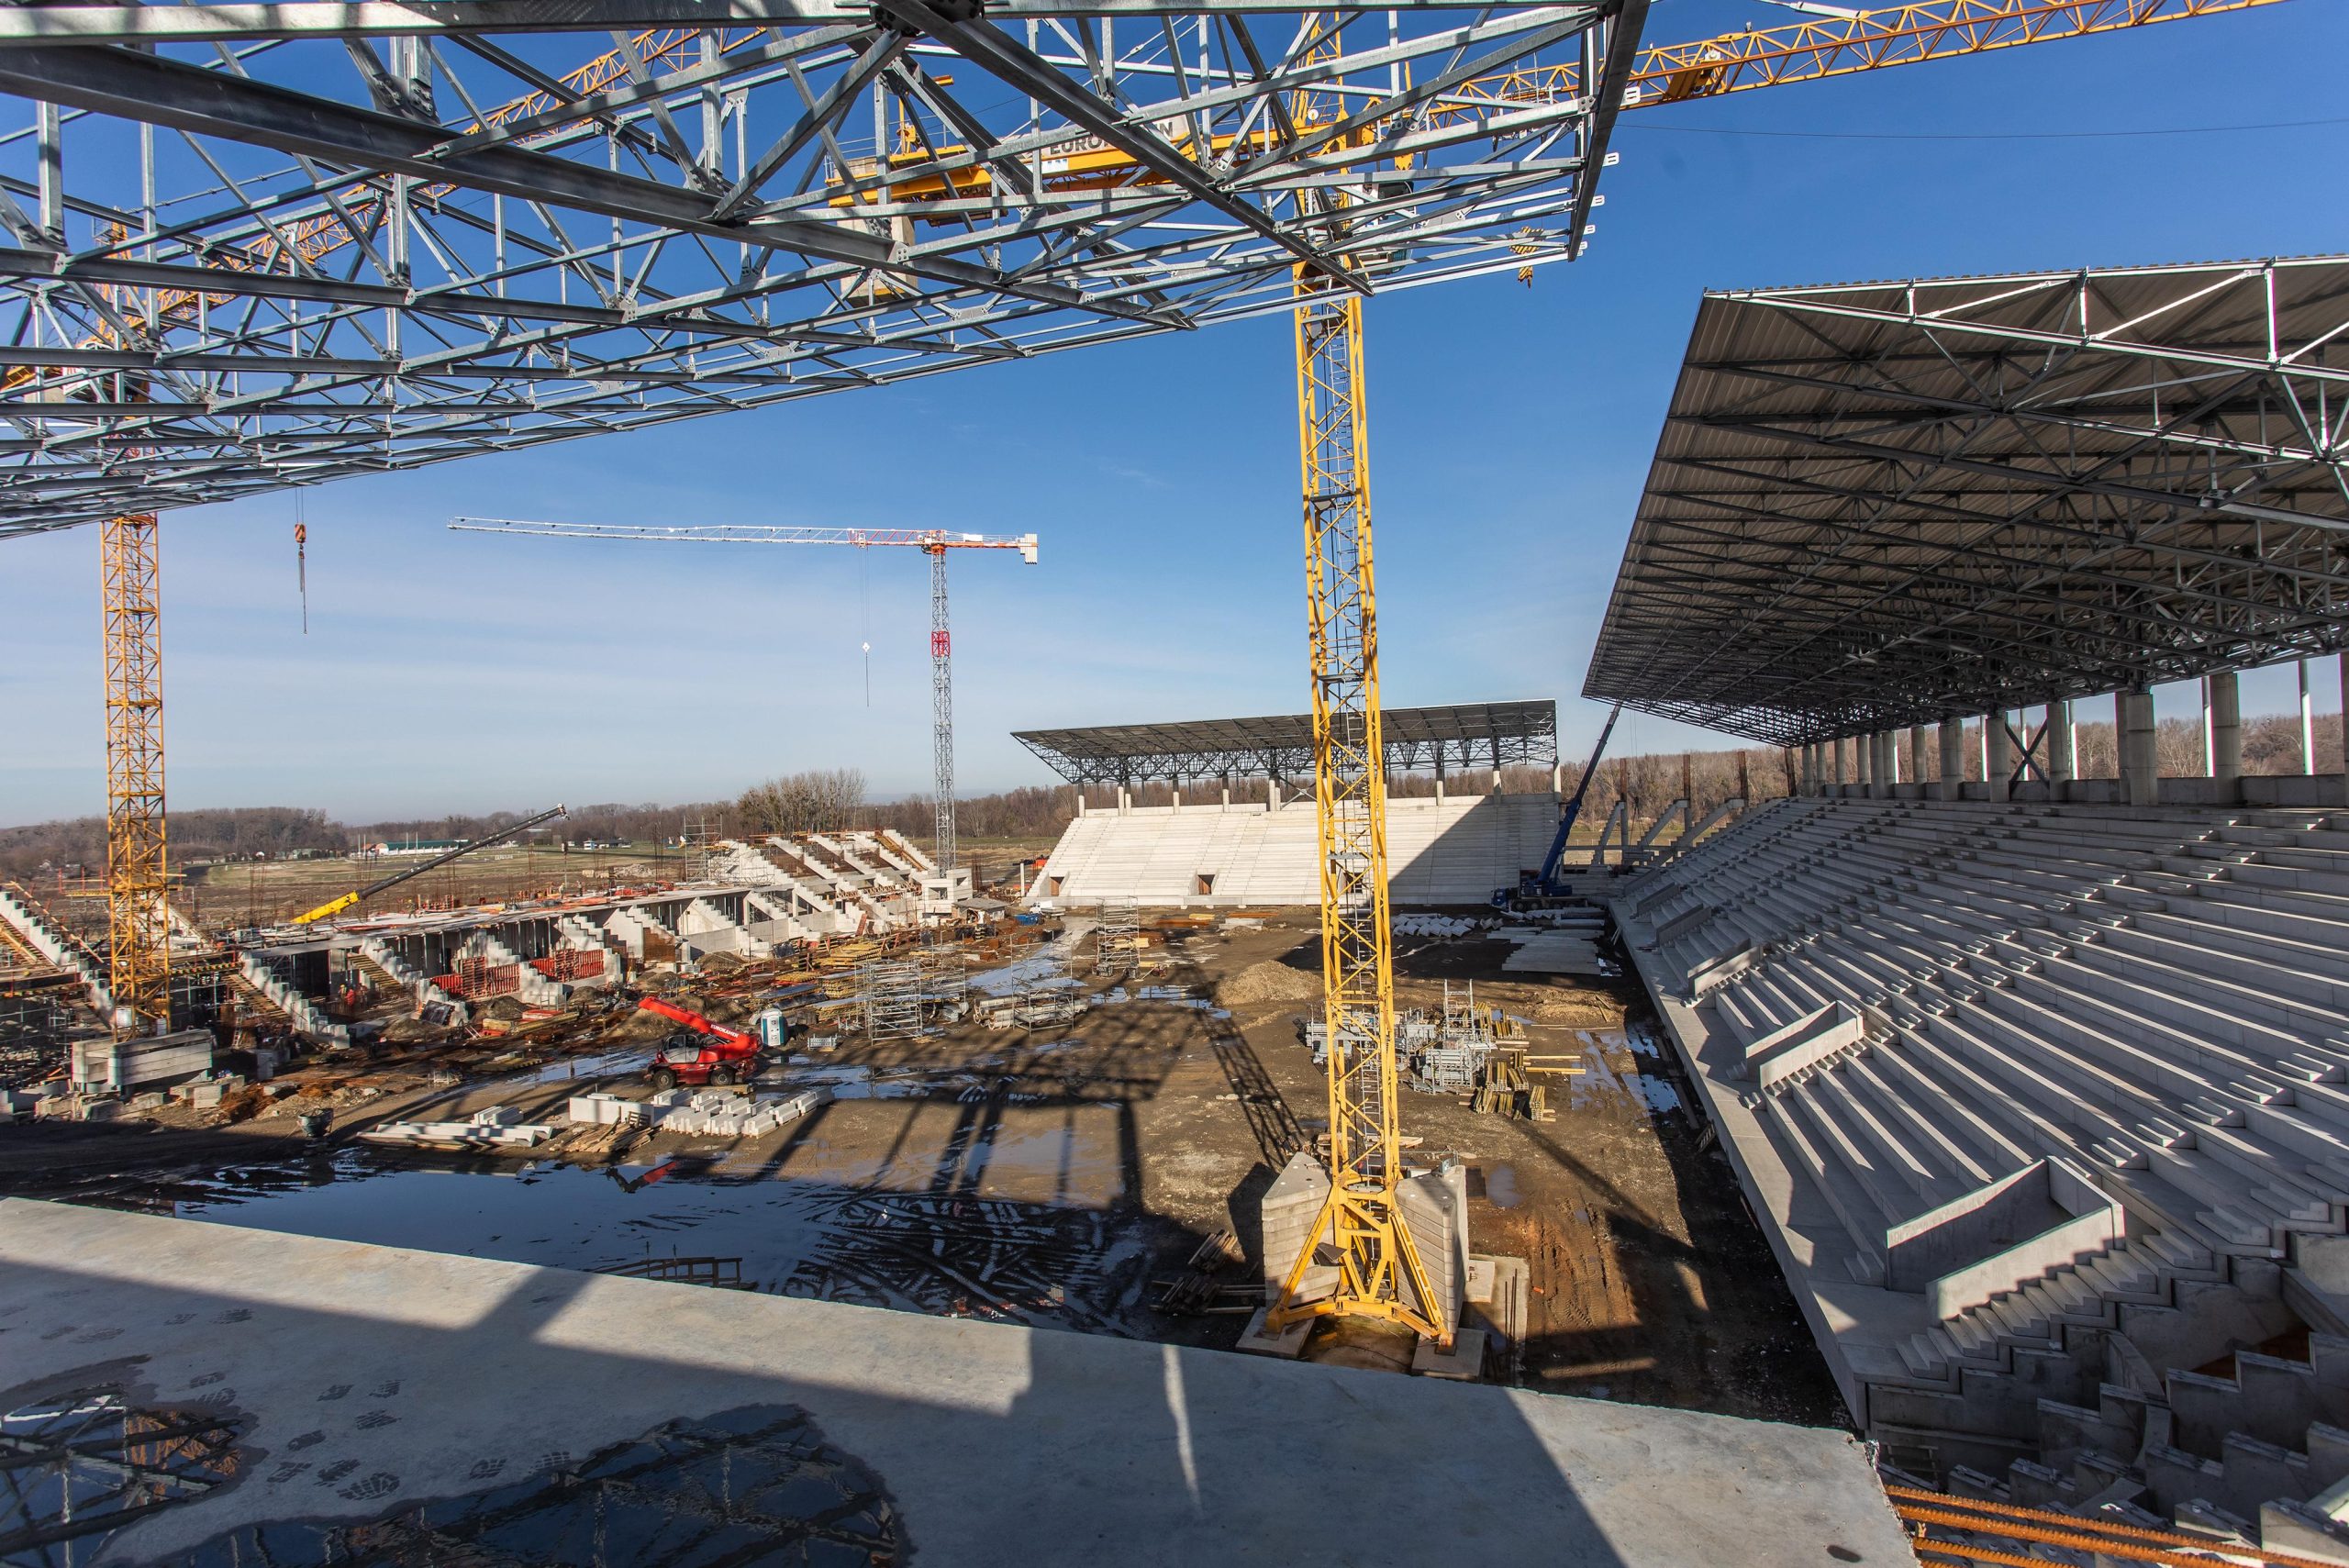 04.01.2021., Osijek, Kopacki rit - Izgradnja novog nogometnog stadiona na Pampasu. Tri strane tribina su izgradjene i natkrivene.
Photo: Davor Javorovic/PIXSELL